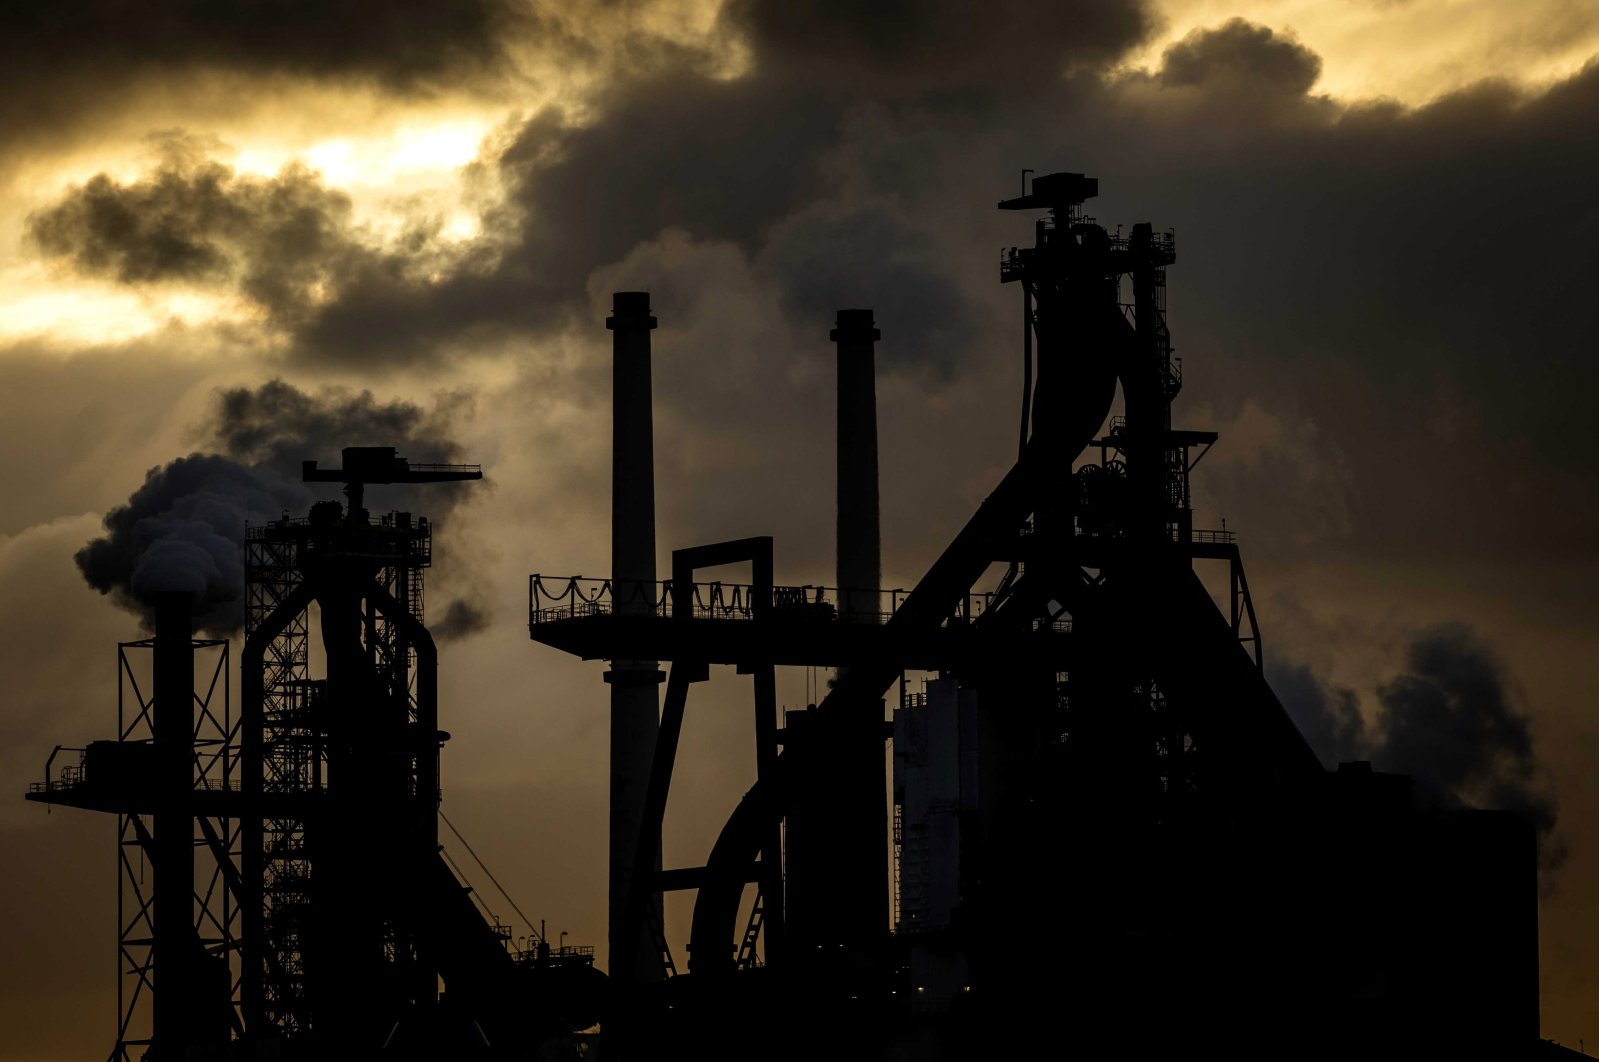 The blast furnaces of a steel factory are seen in Wijk aan Zee, the Netherlands, Jan. 21, 2022. (EPA Photo)